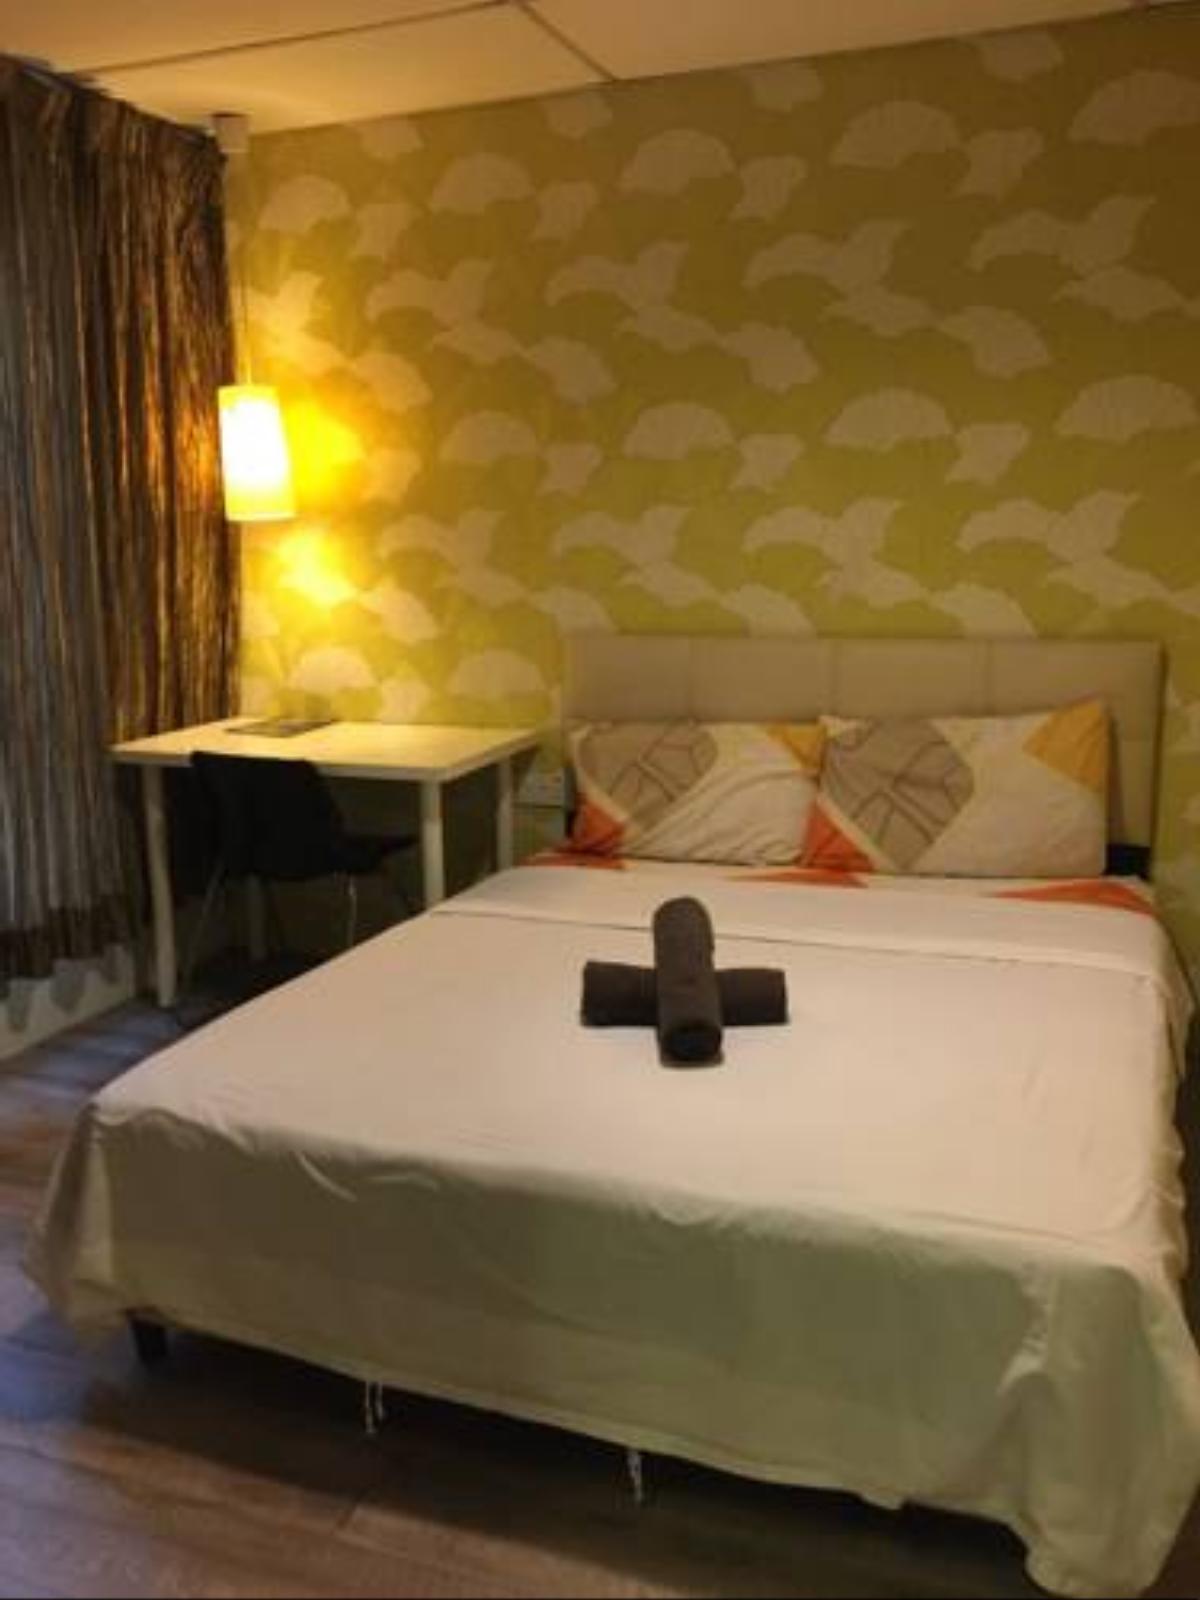 7 Star Hotel Hotel Kota Damansara Malaysia